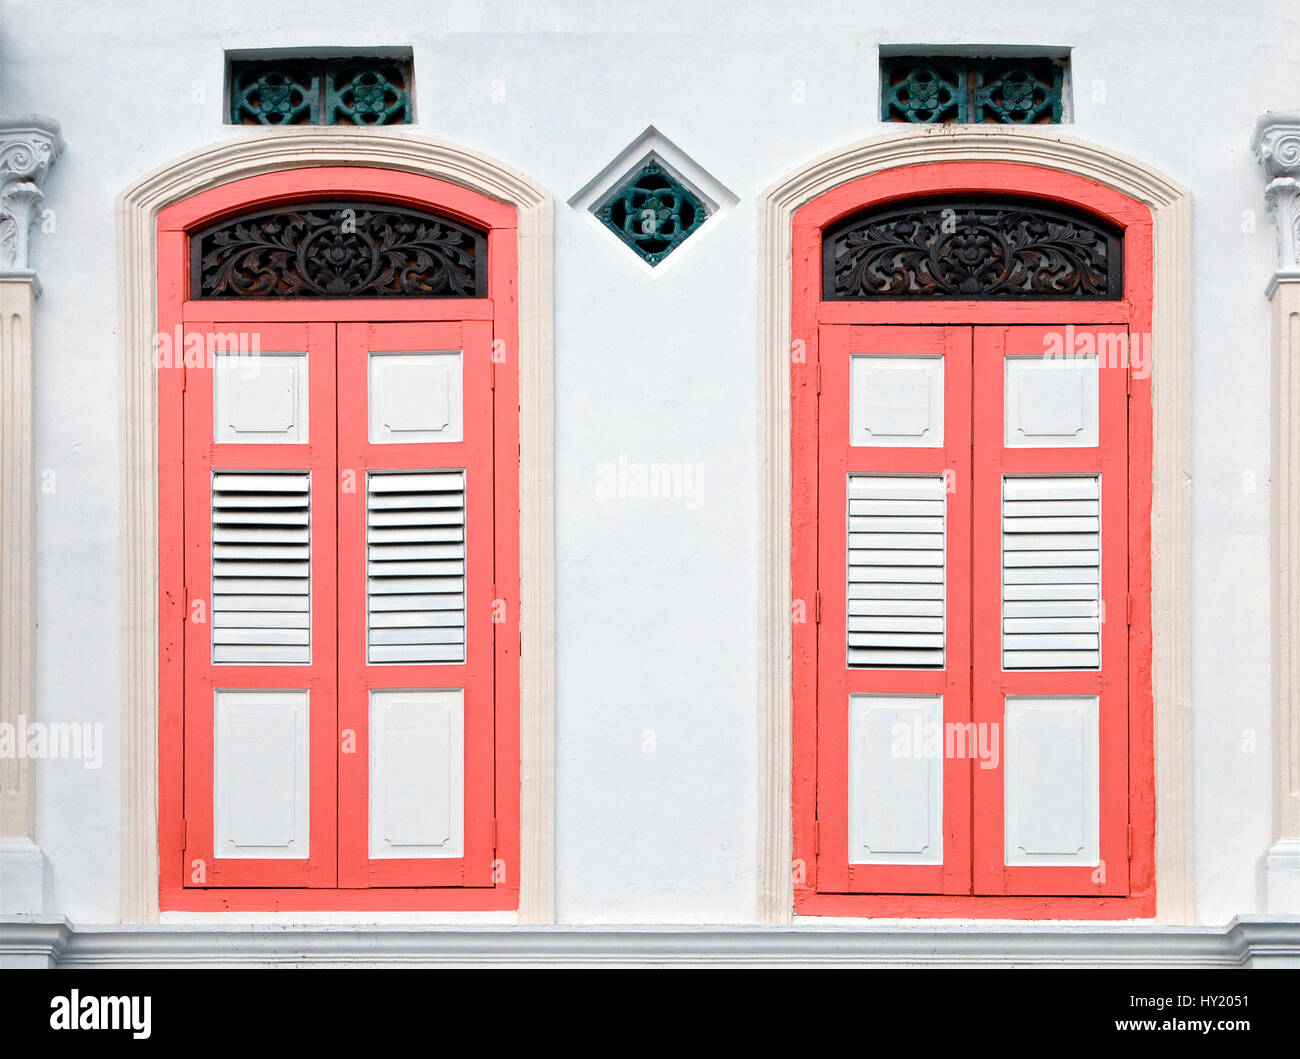 Detail Image of a colorful decorative art deco window, Singapore. Stock Photo